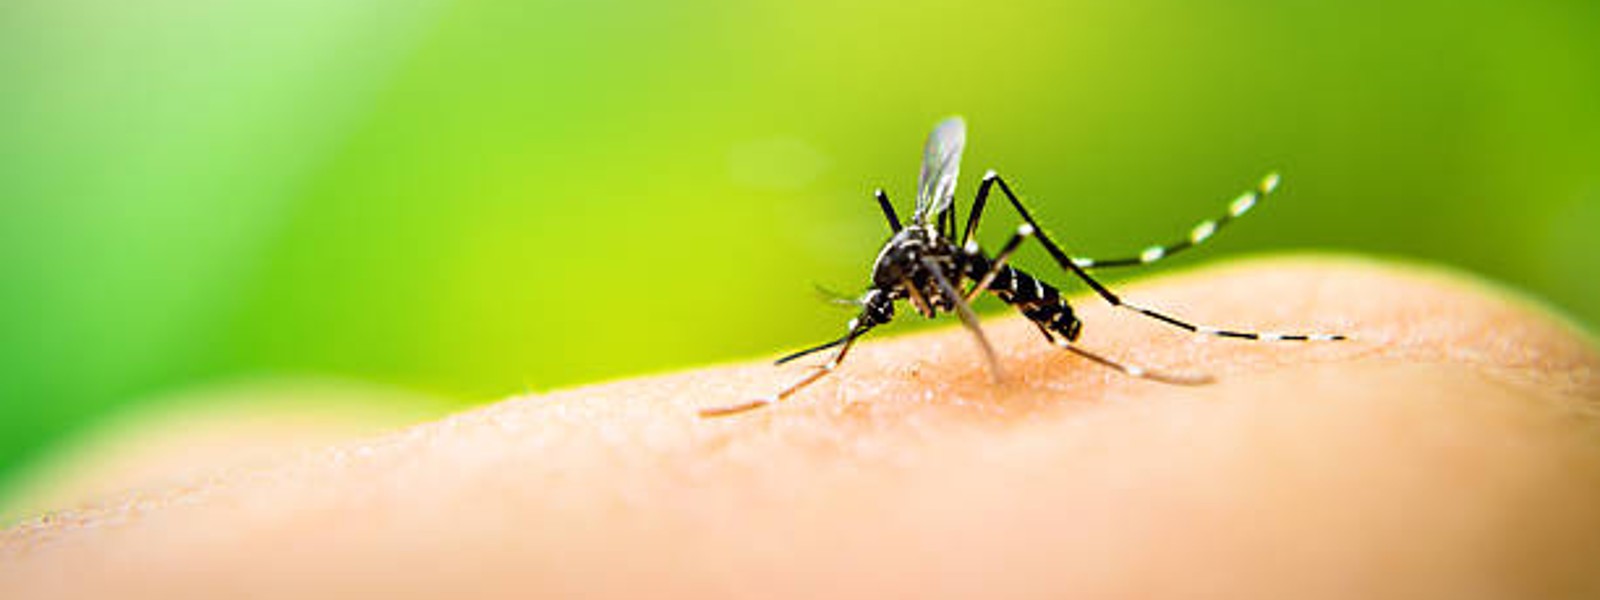 66 Dengue High Risk Zones in Sri Lanka, over 48,000 Dengue cases this year